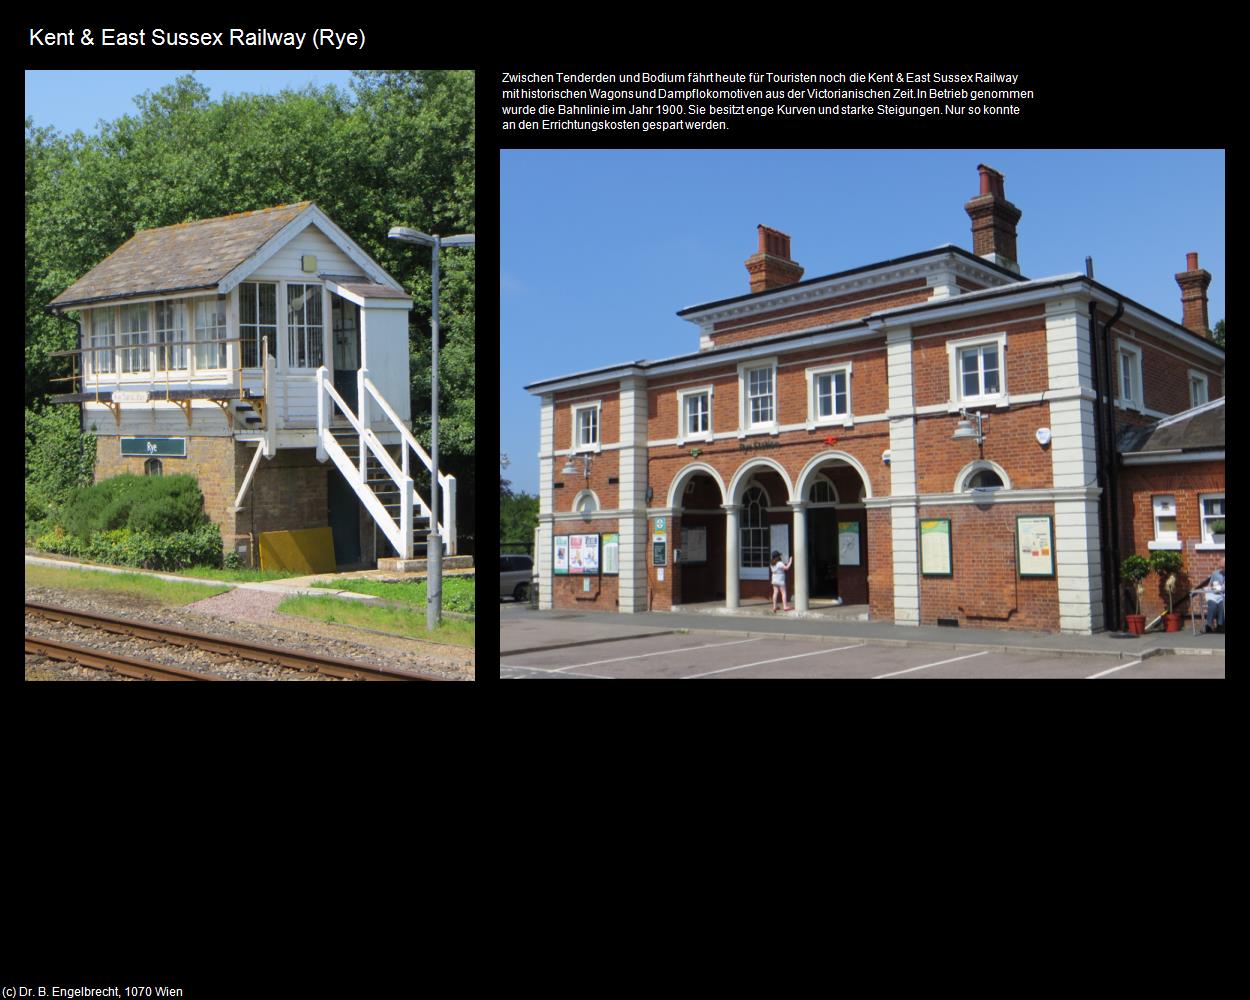 Kent & East Sussex Railway  (Rye, England) in Kulturatlas-ENGLAND und WALES